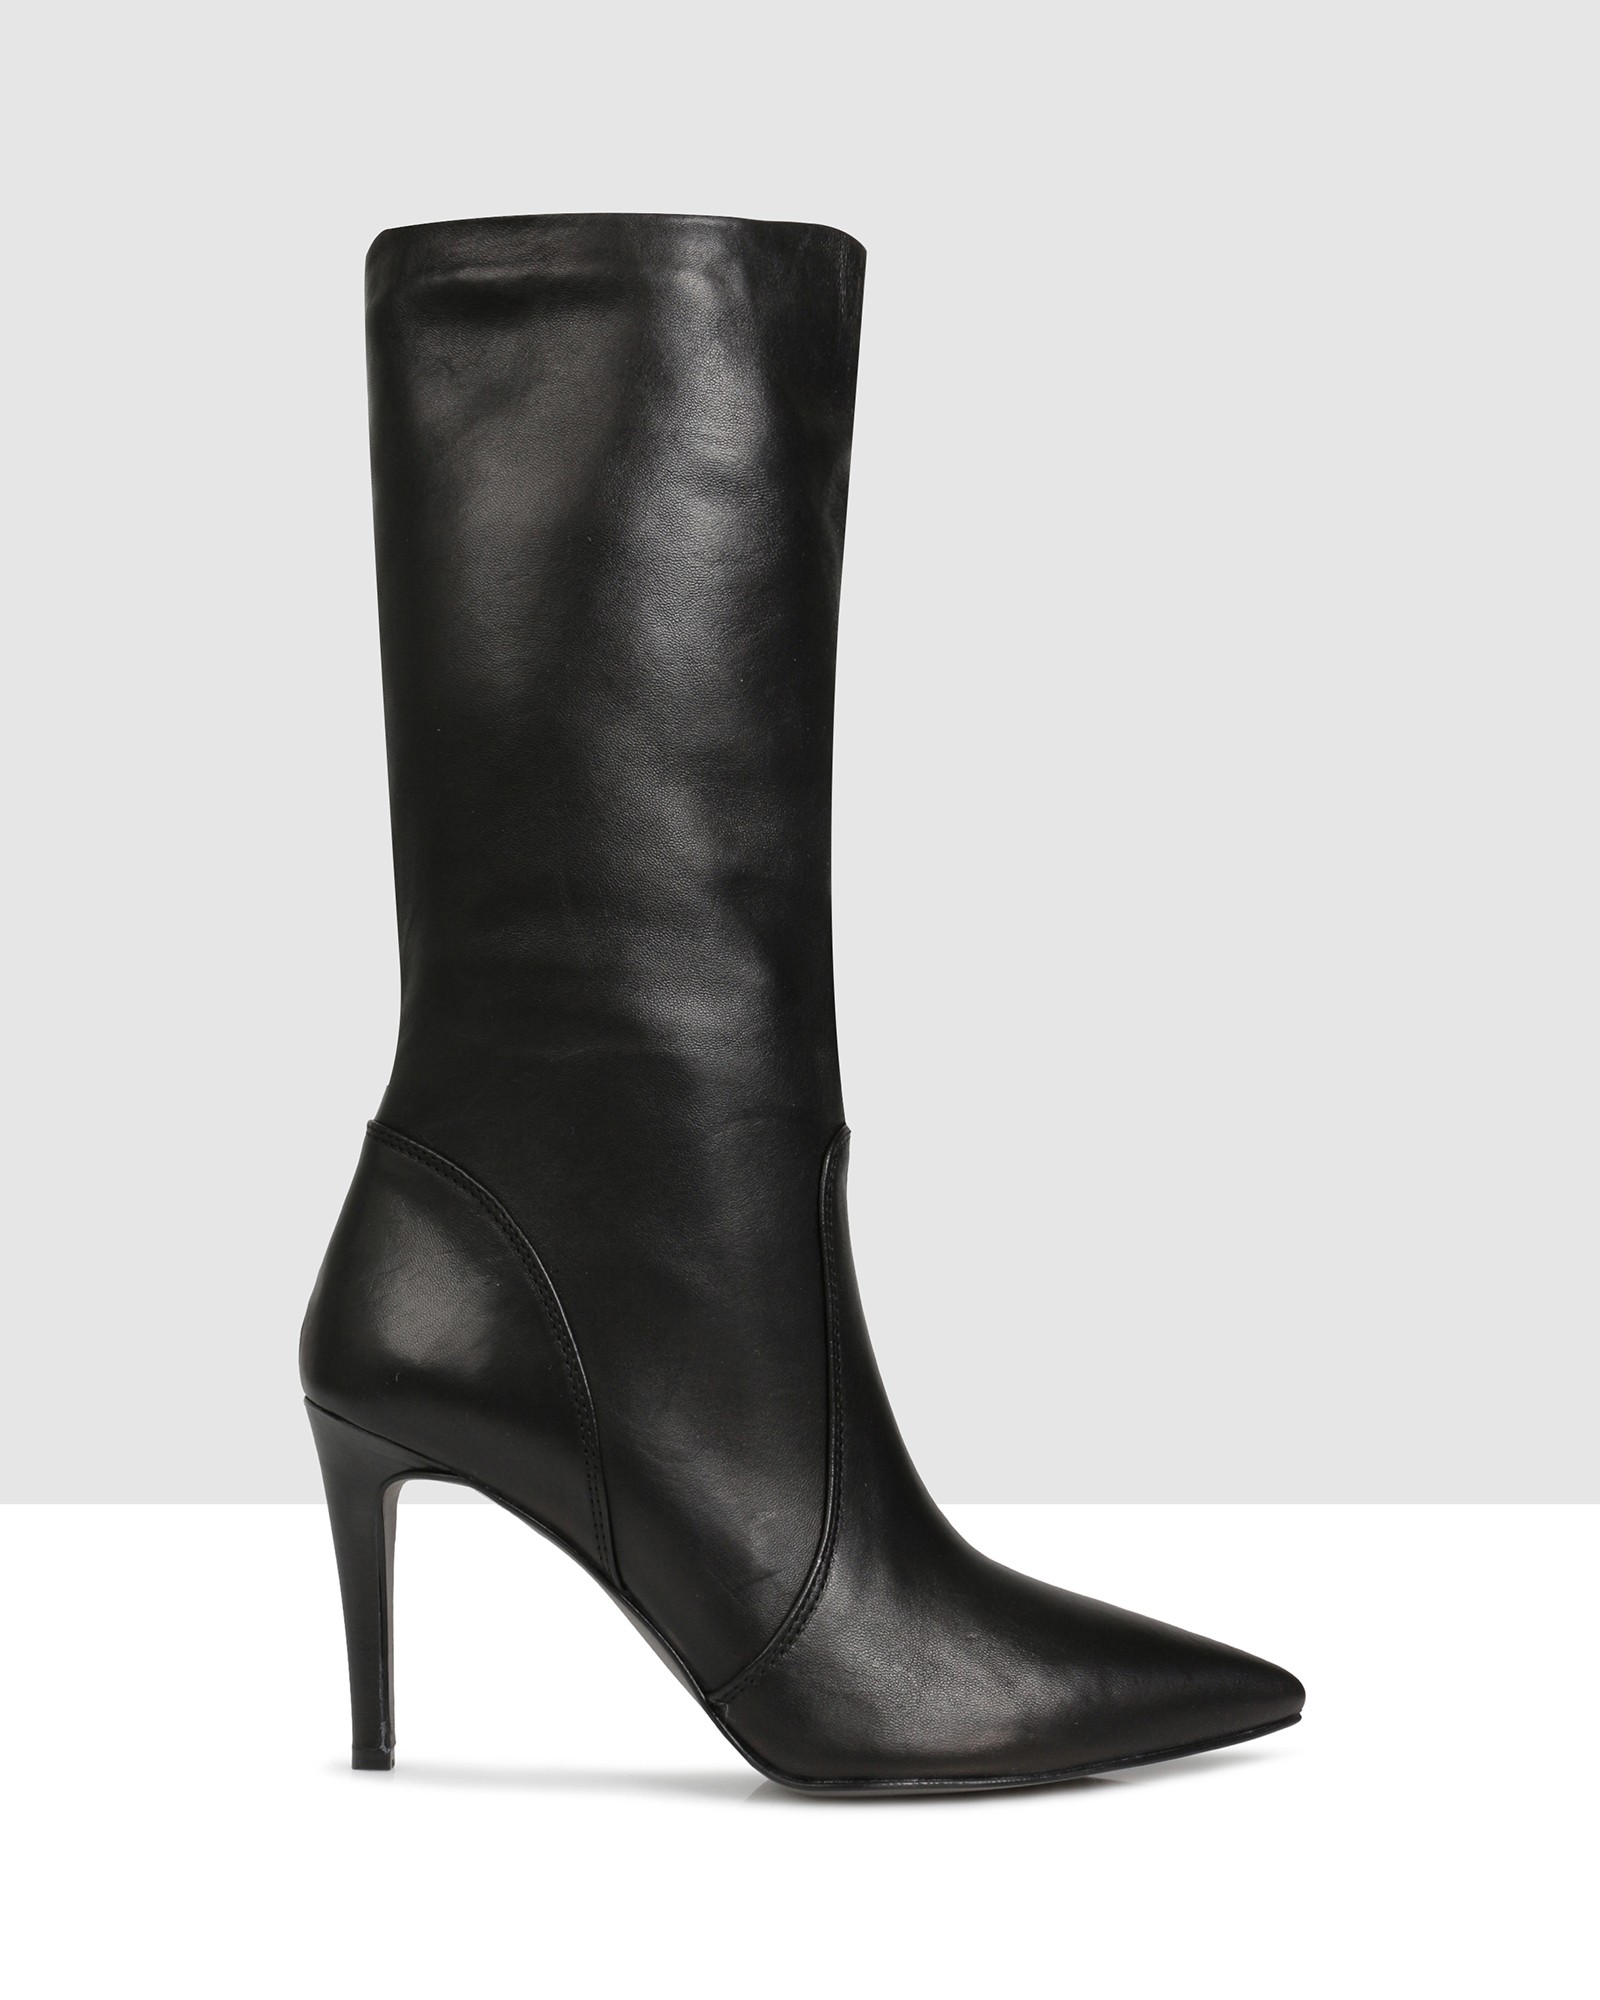 Sybella Mid Calf Boots Black by Sempre Di | ShoeSales